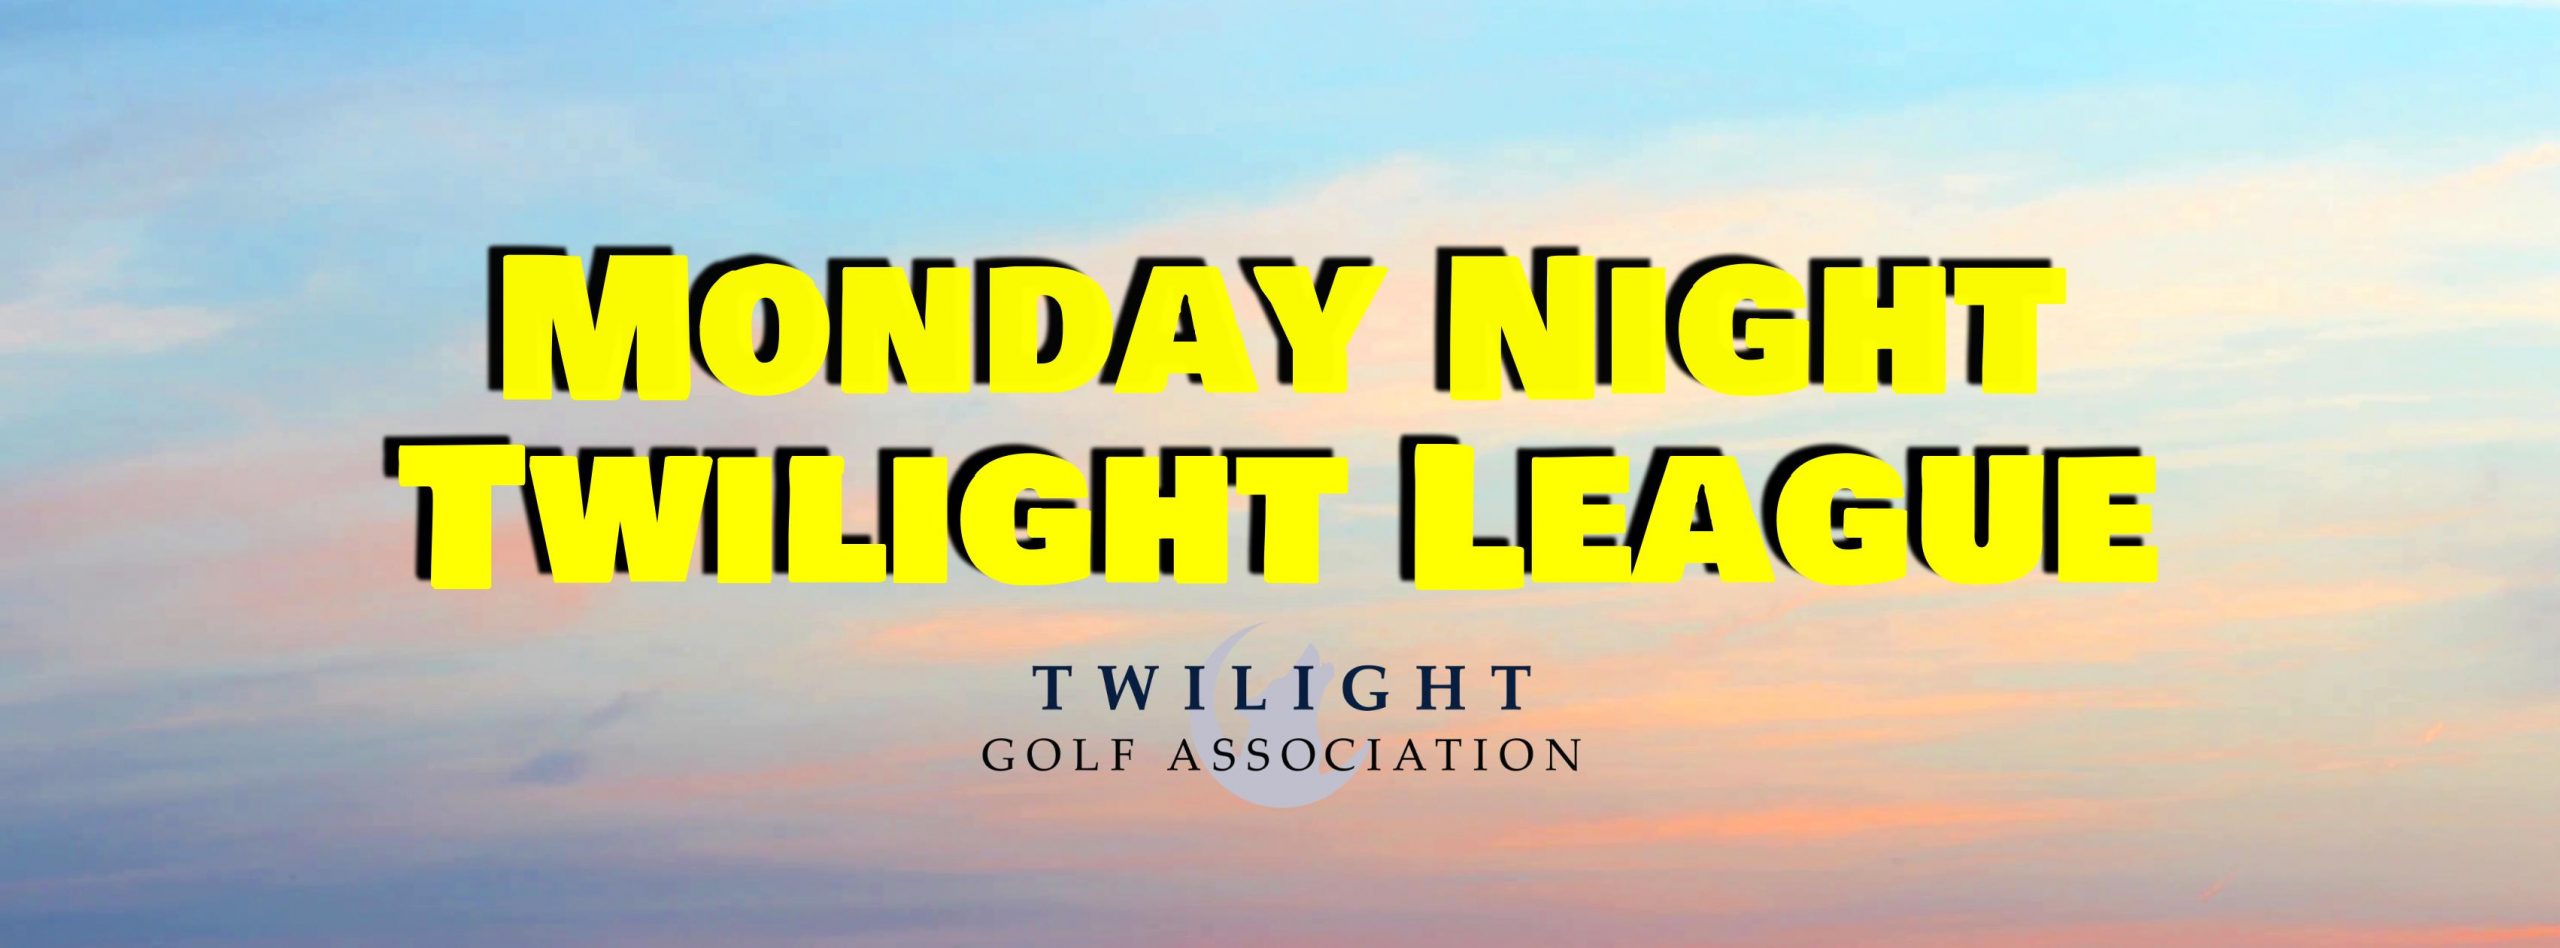 Monday Night Twilight League at Bellair Golf Club